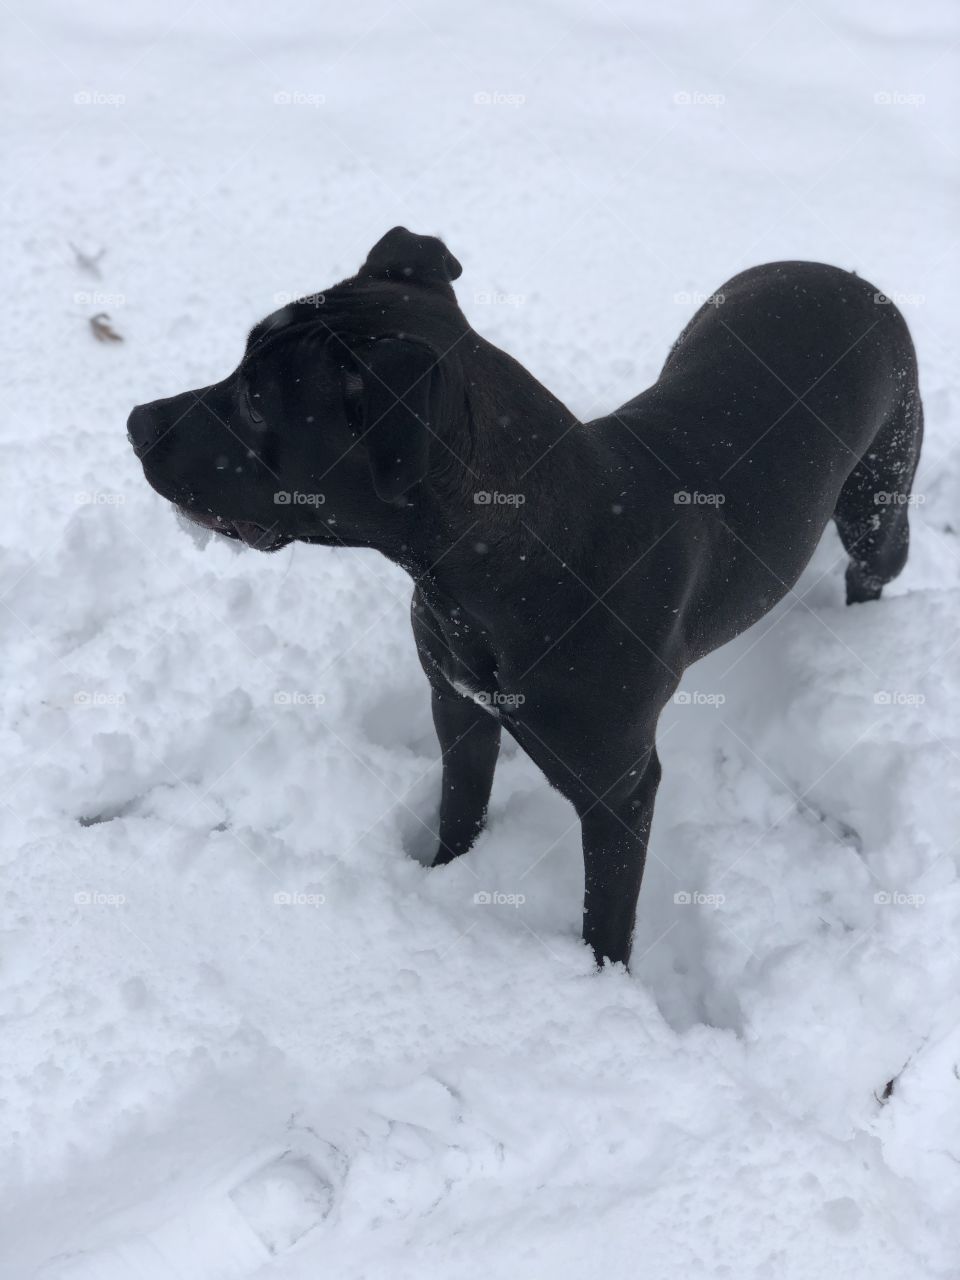 Pitbull enjoying the beautiful snow. Doesn’t come often!